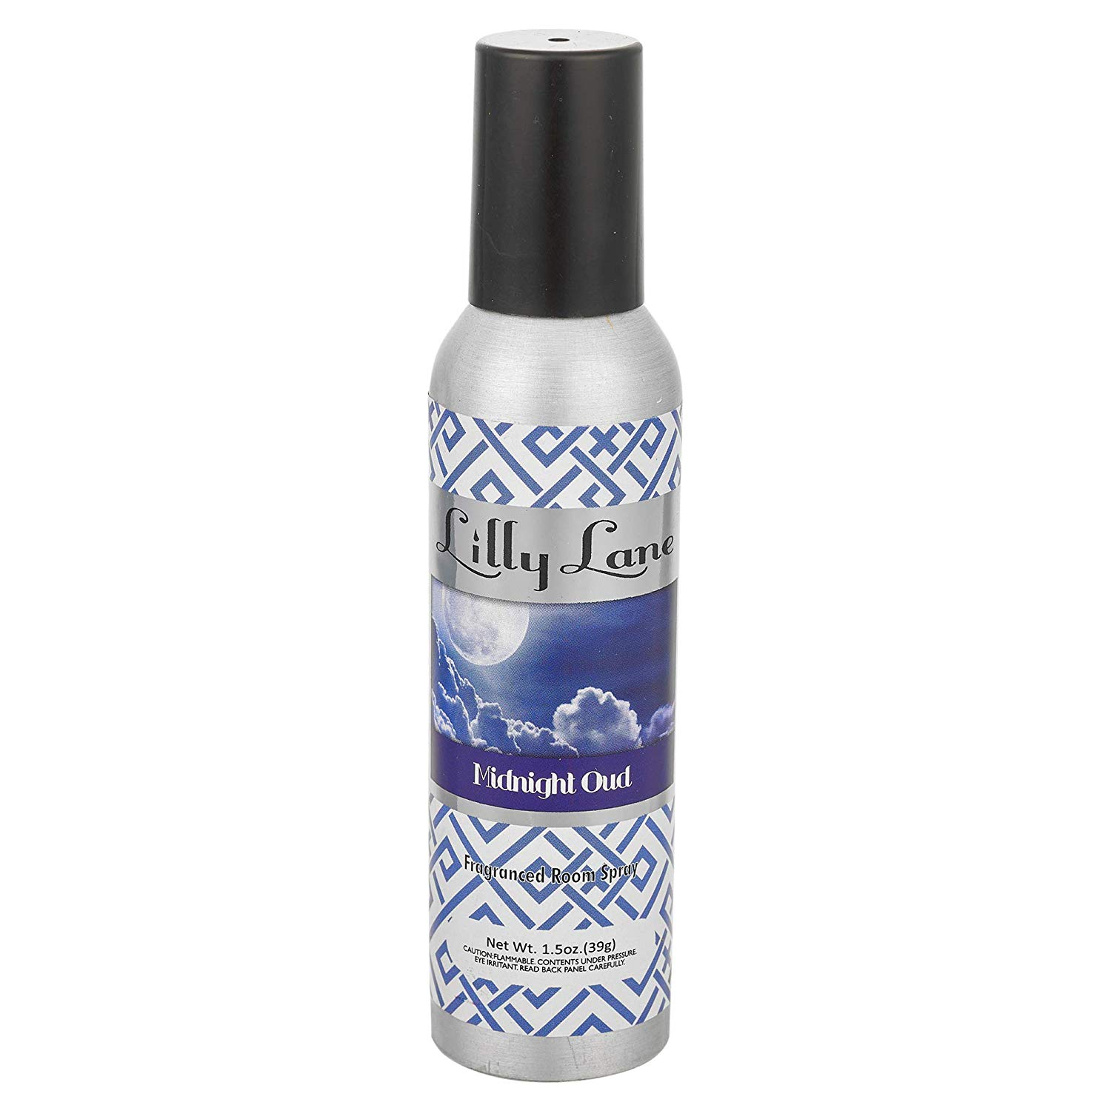 Lilly Lane Midnight Oud Room Spray